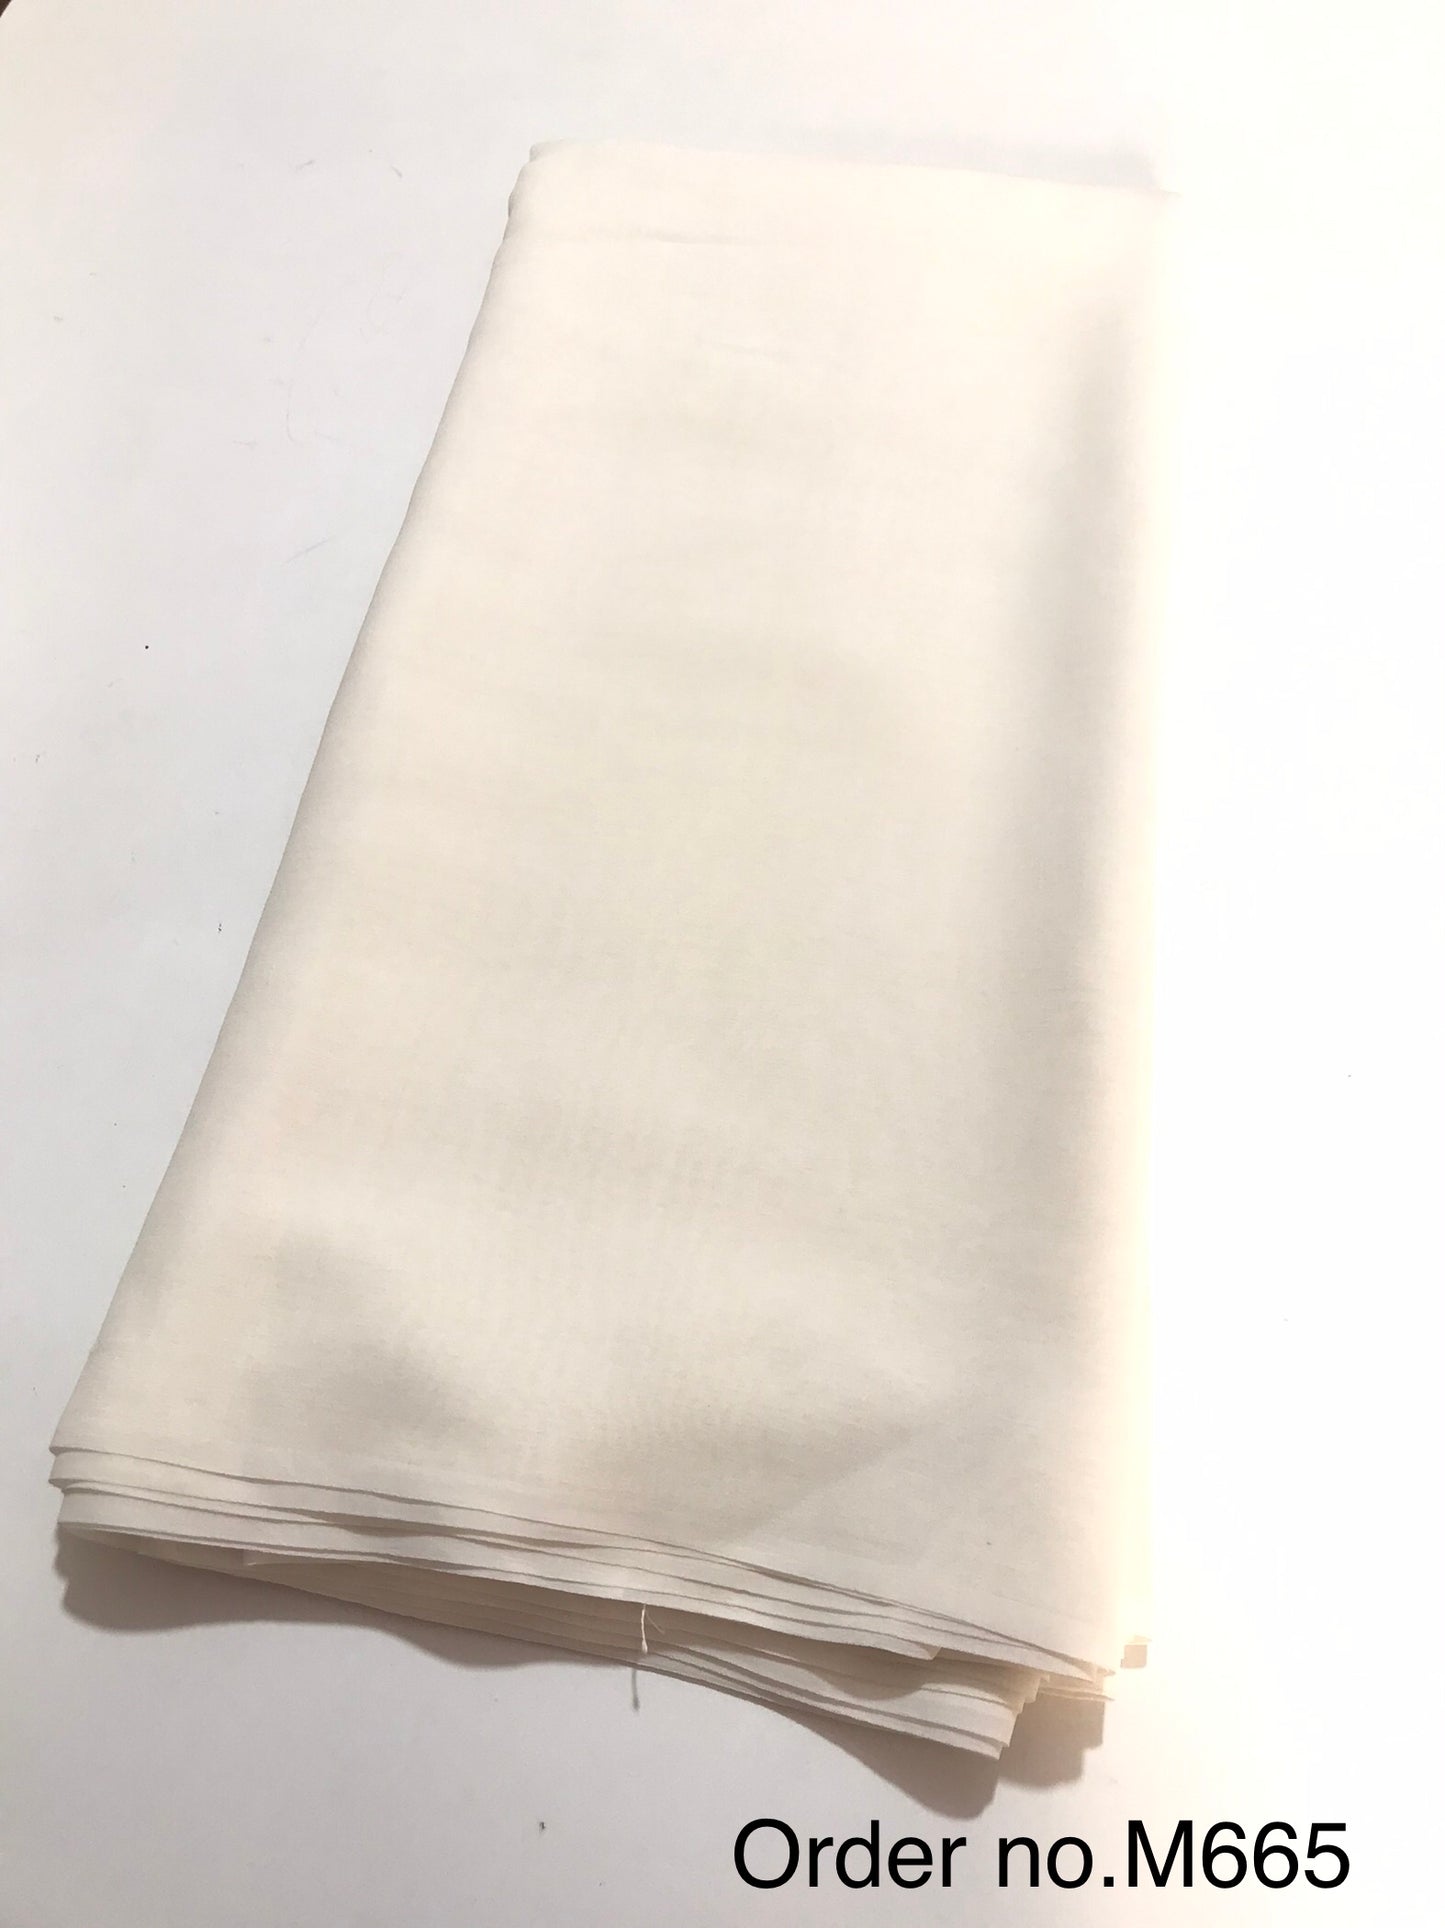 Silk crepe 60gm width 44”